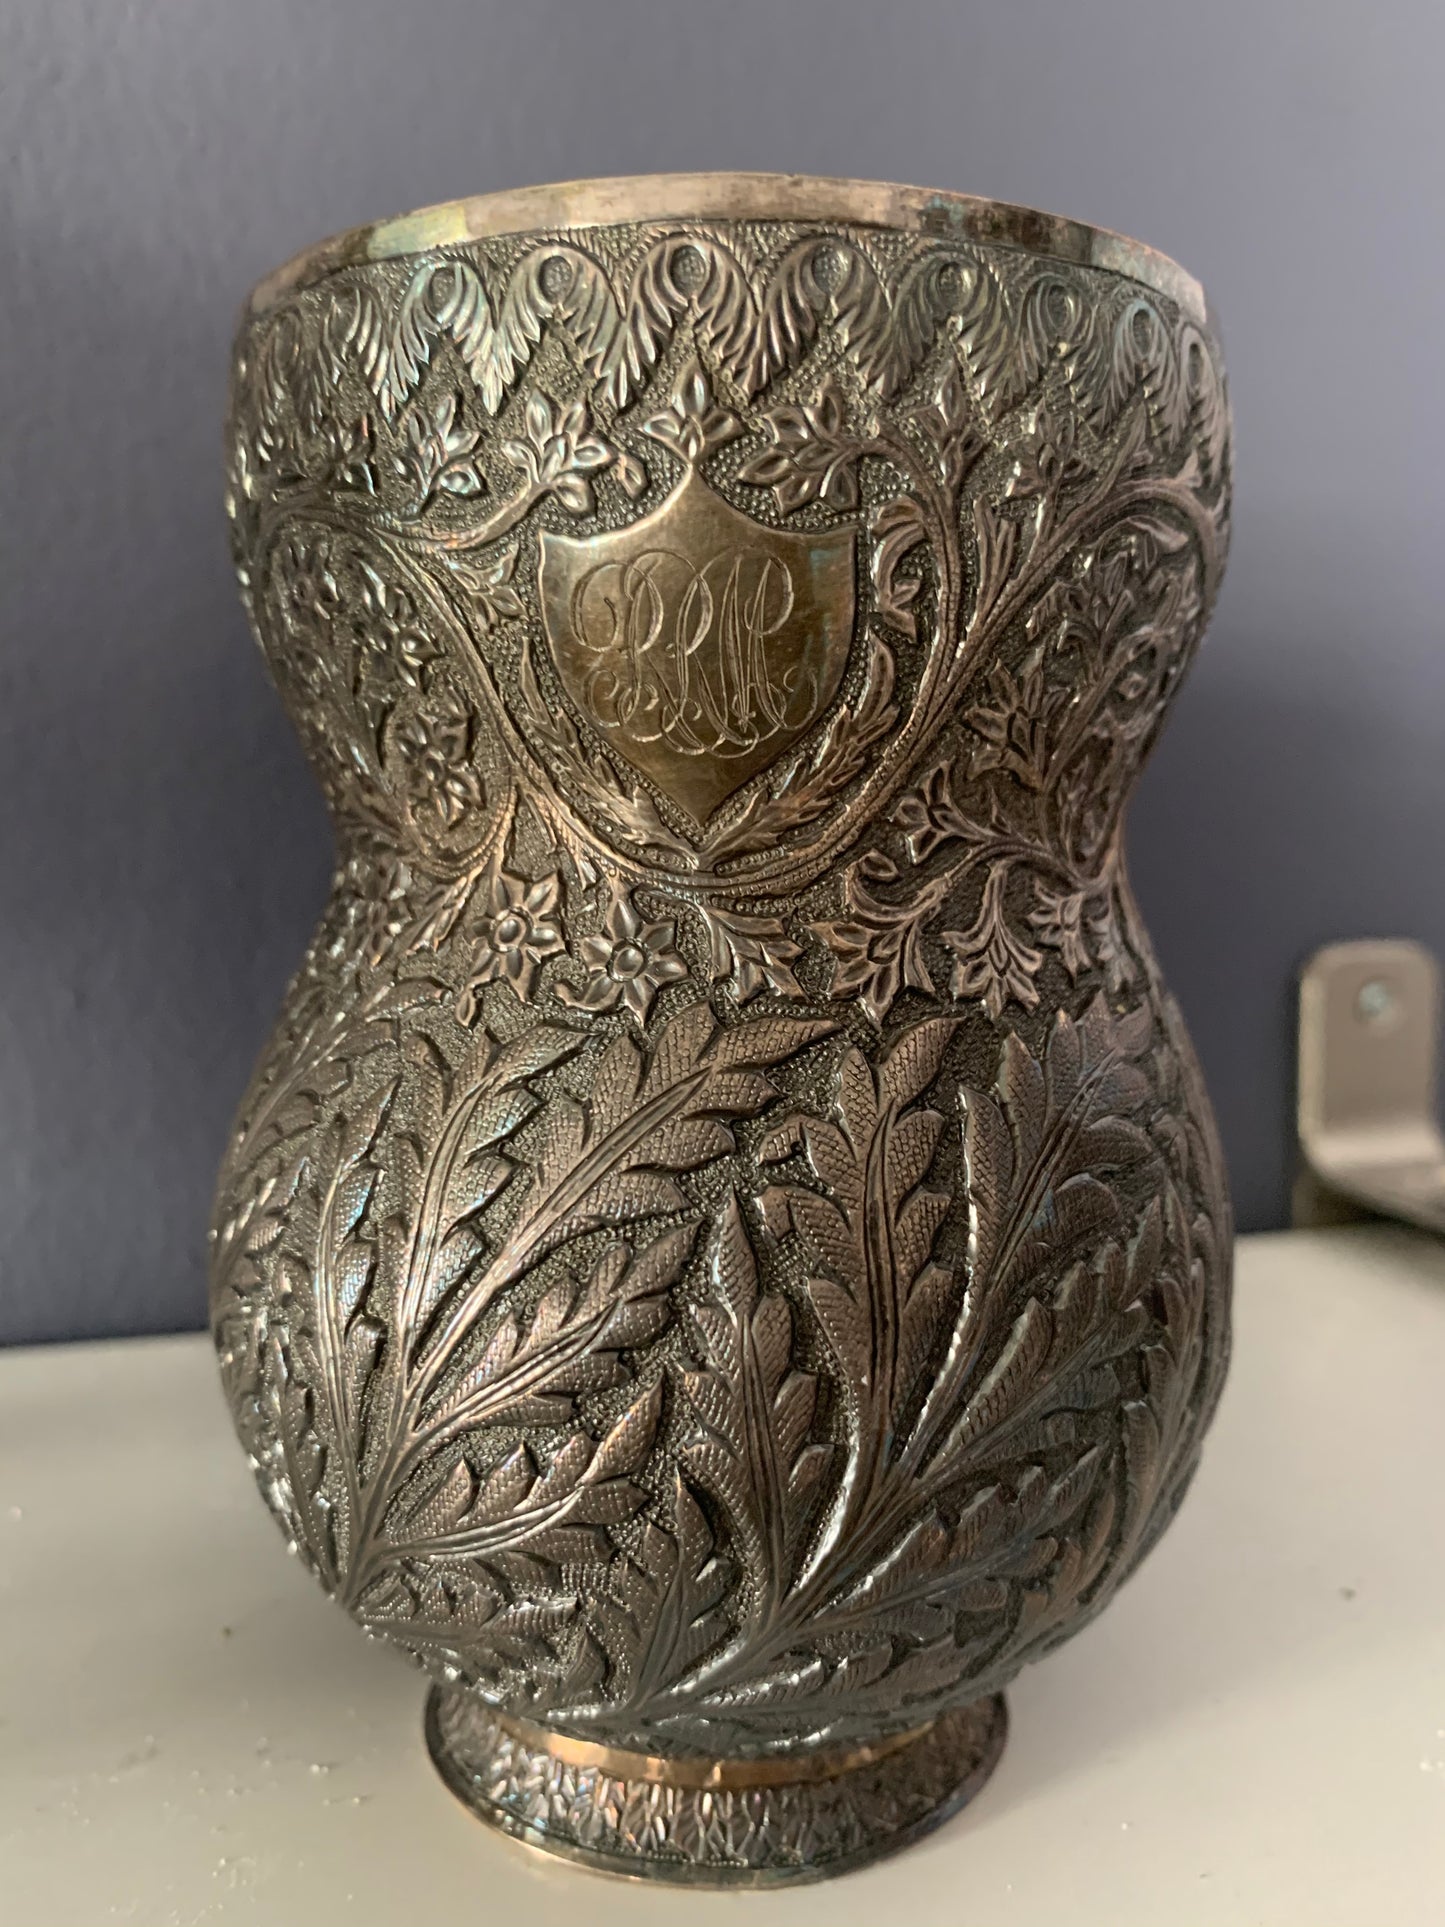 An intricately carved silver mug